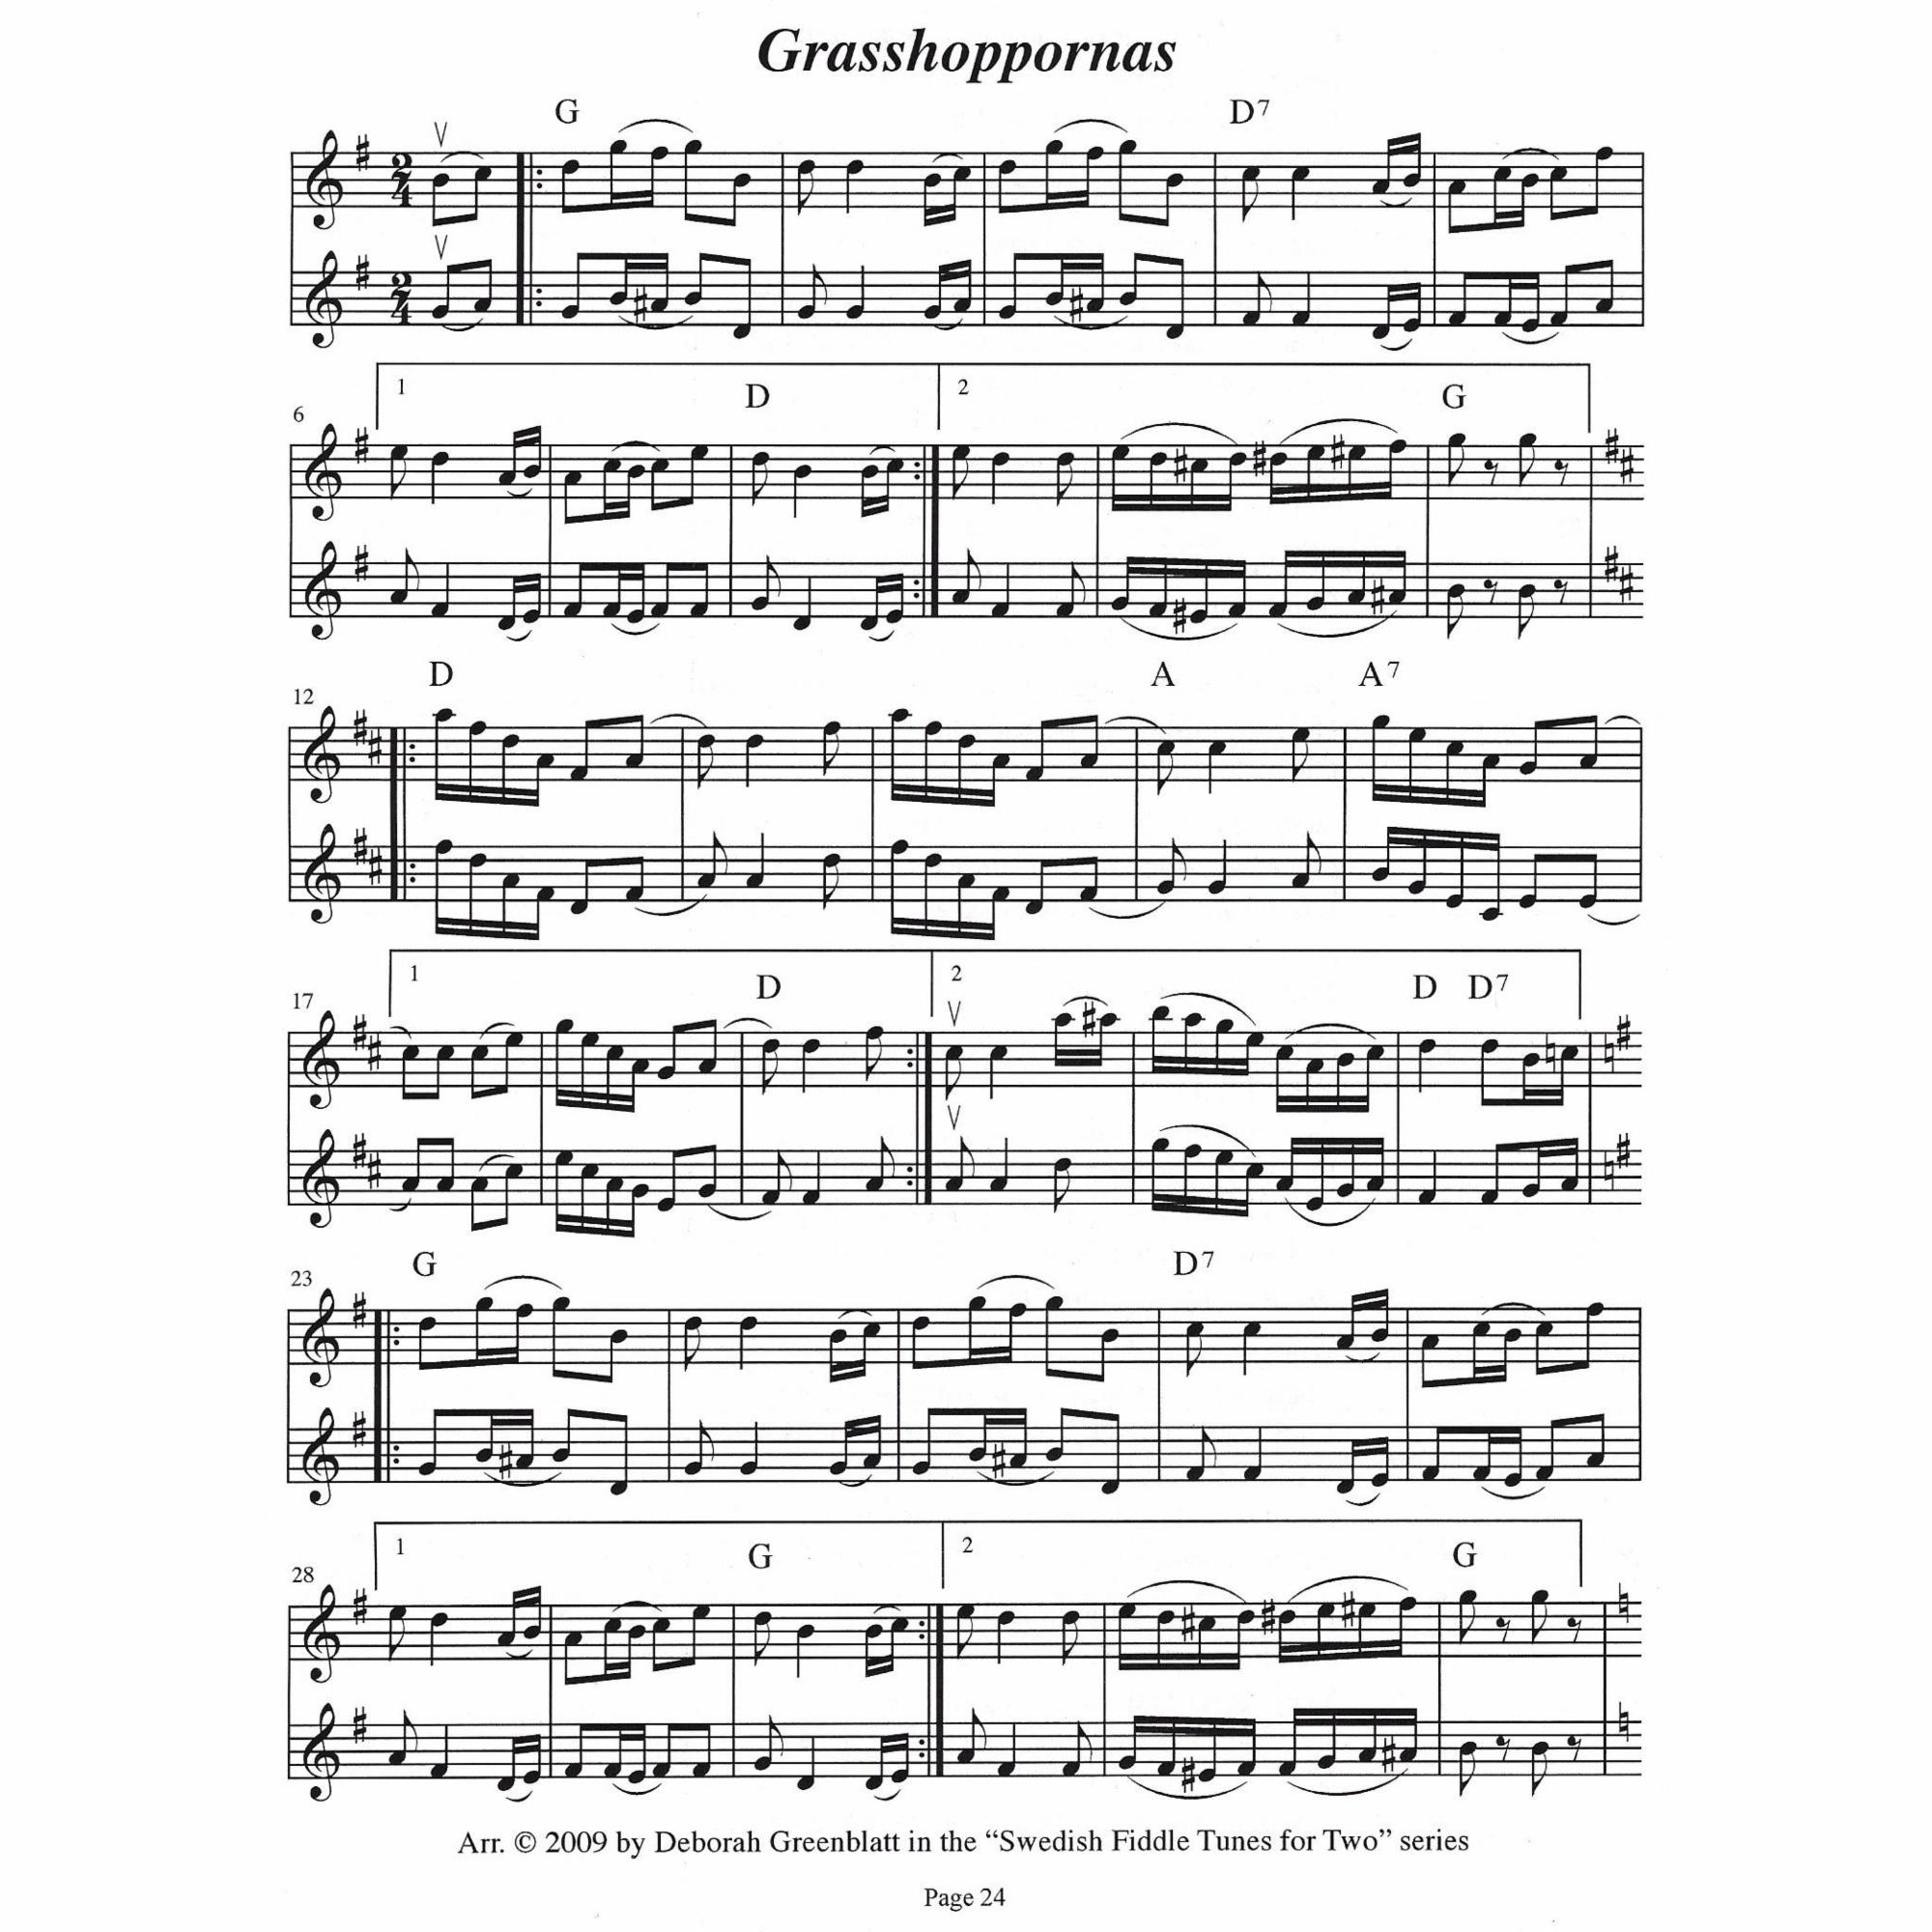 Sample: Two Violins (Pg. 24)